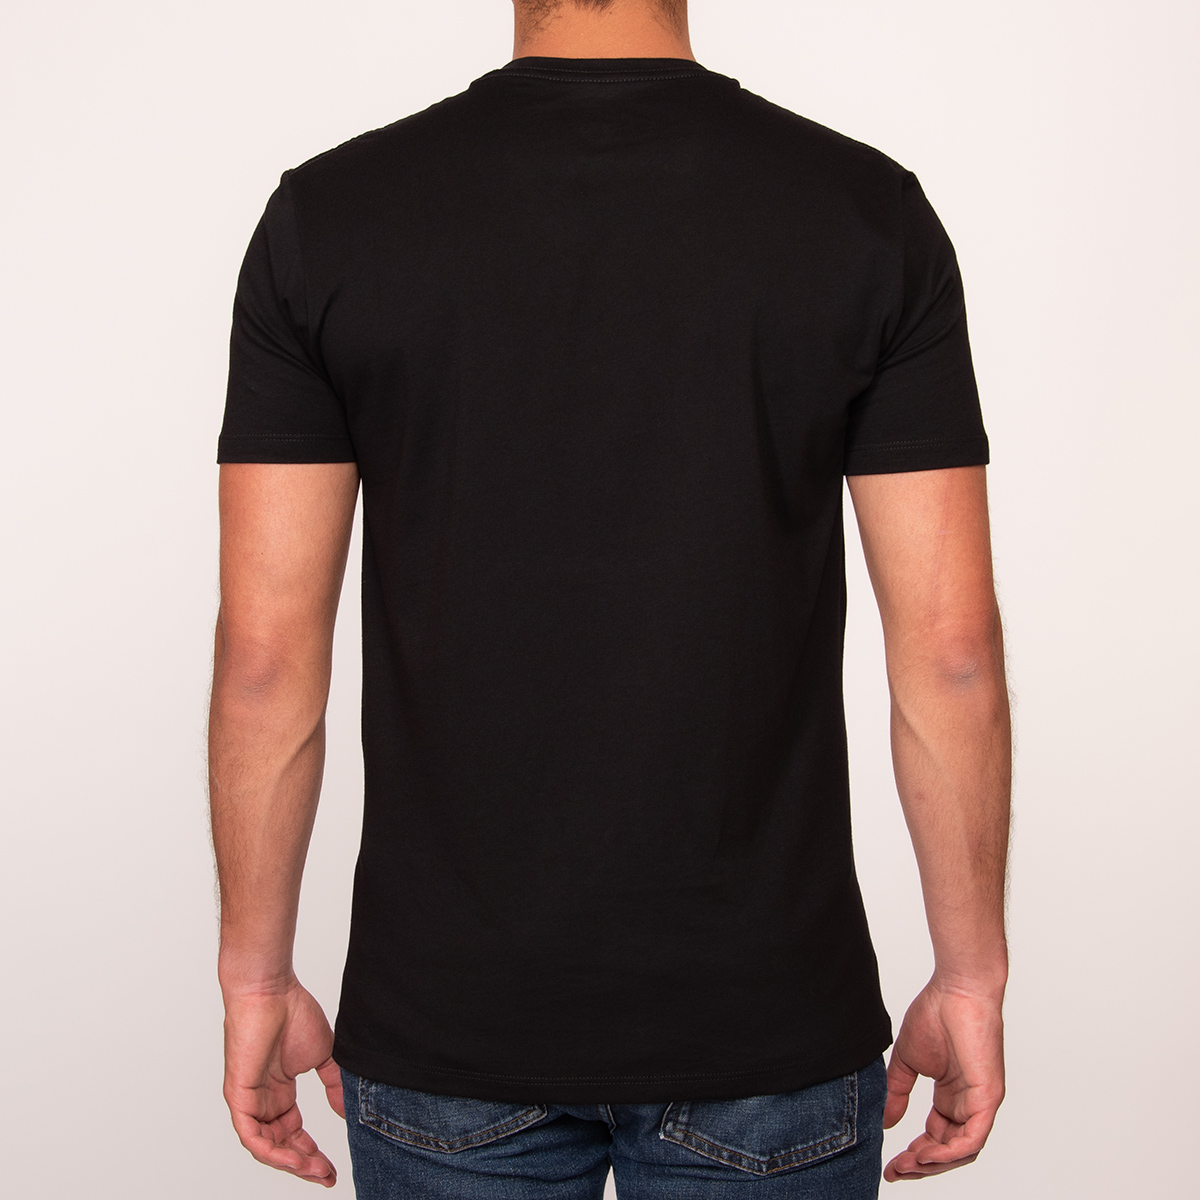 https://dondurazno.com/images/camiseta-u-negra-hombre-espalda.jpg